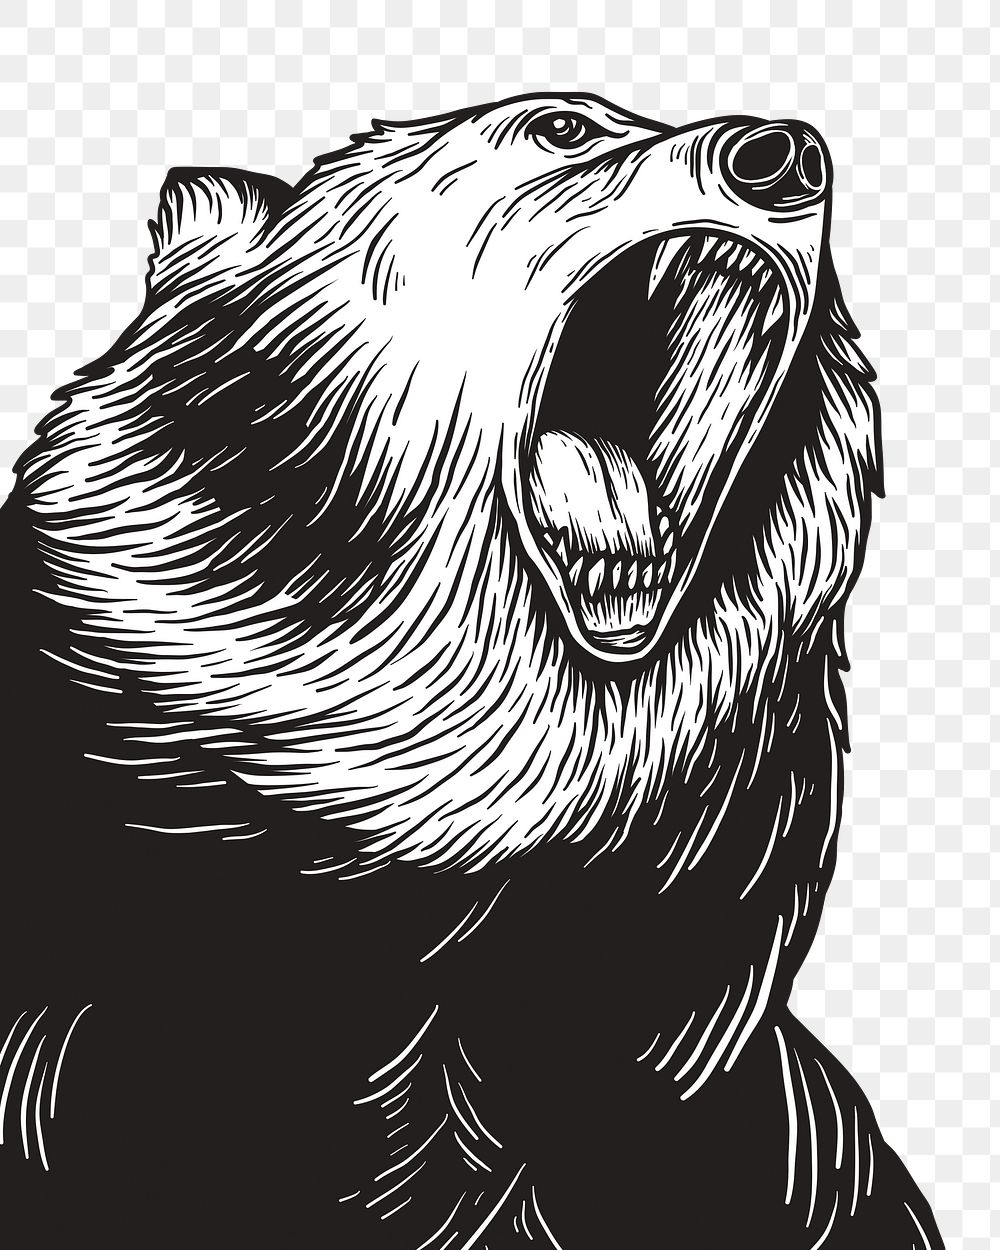 bear growling graphic